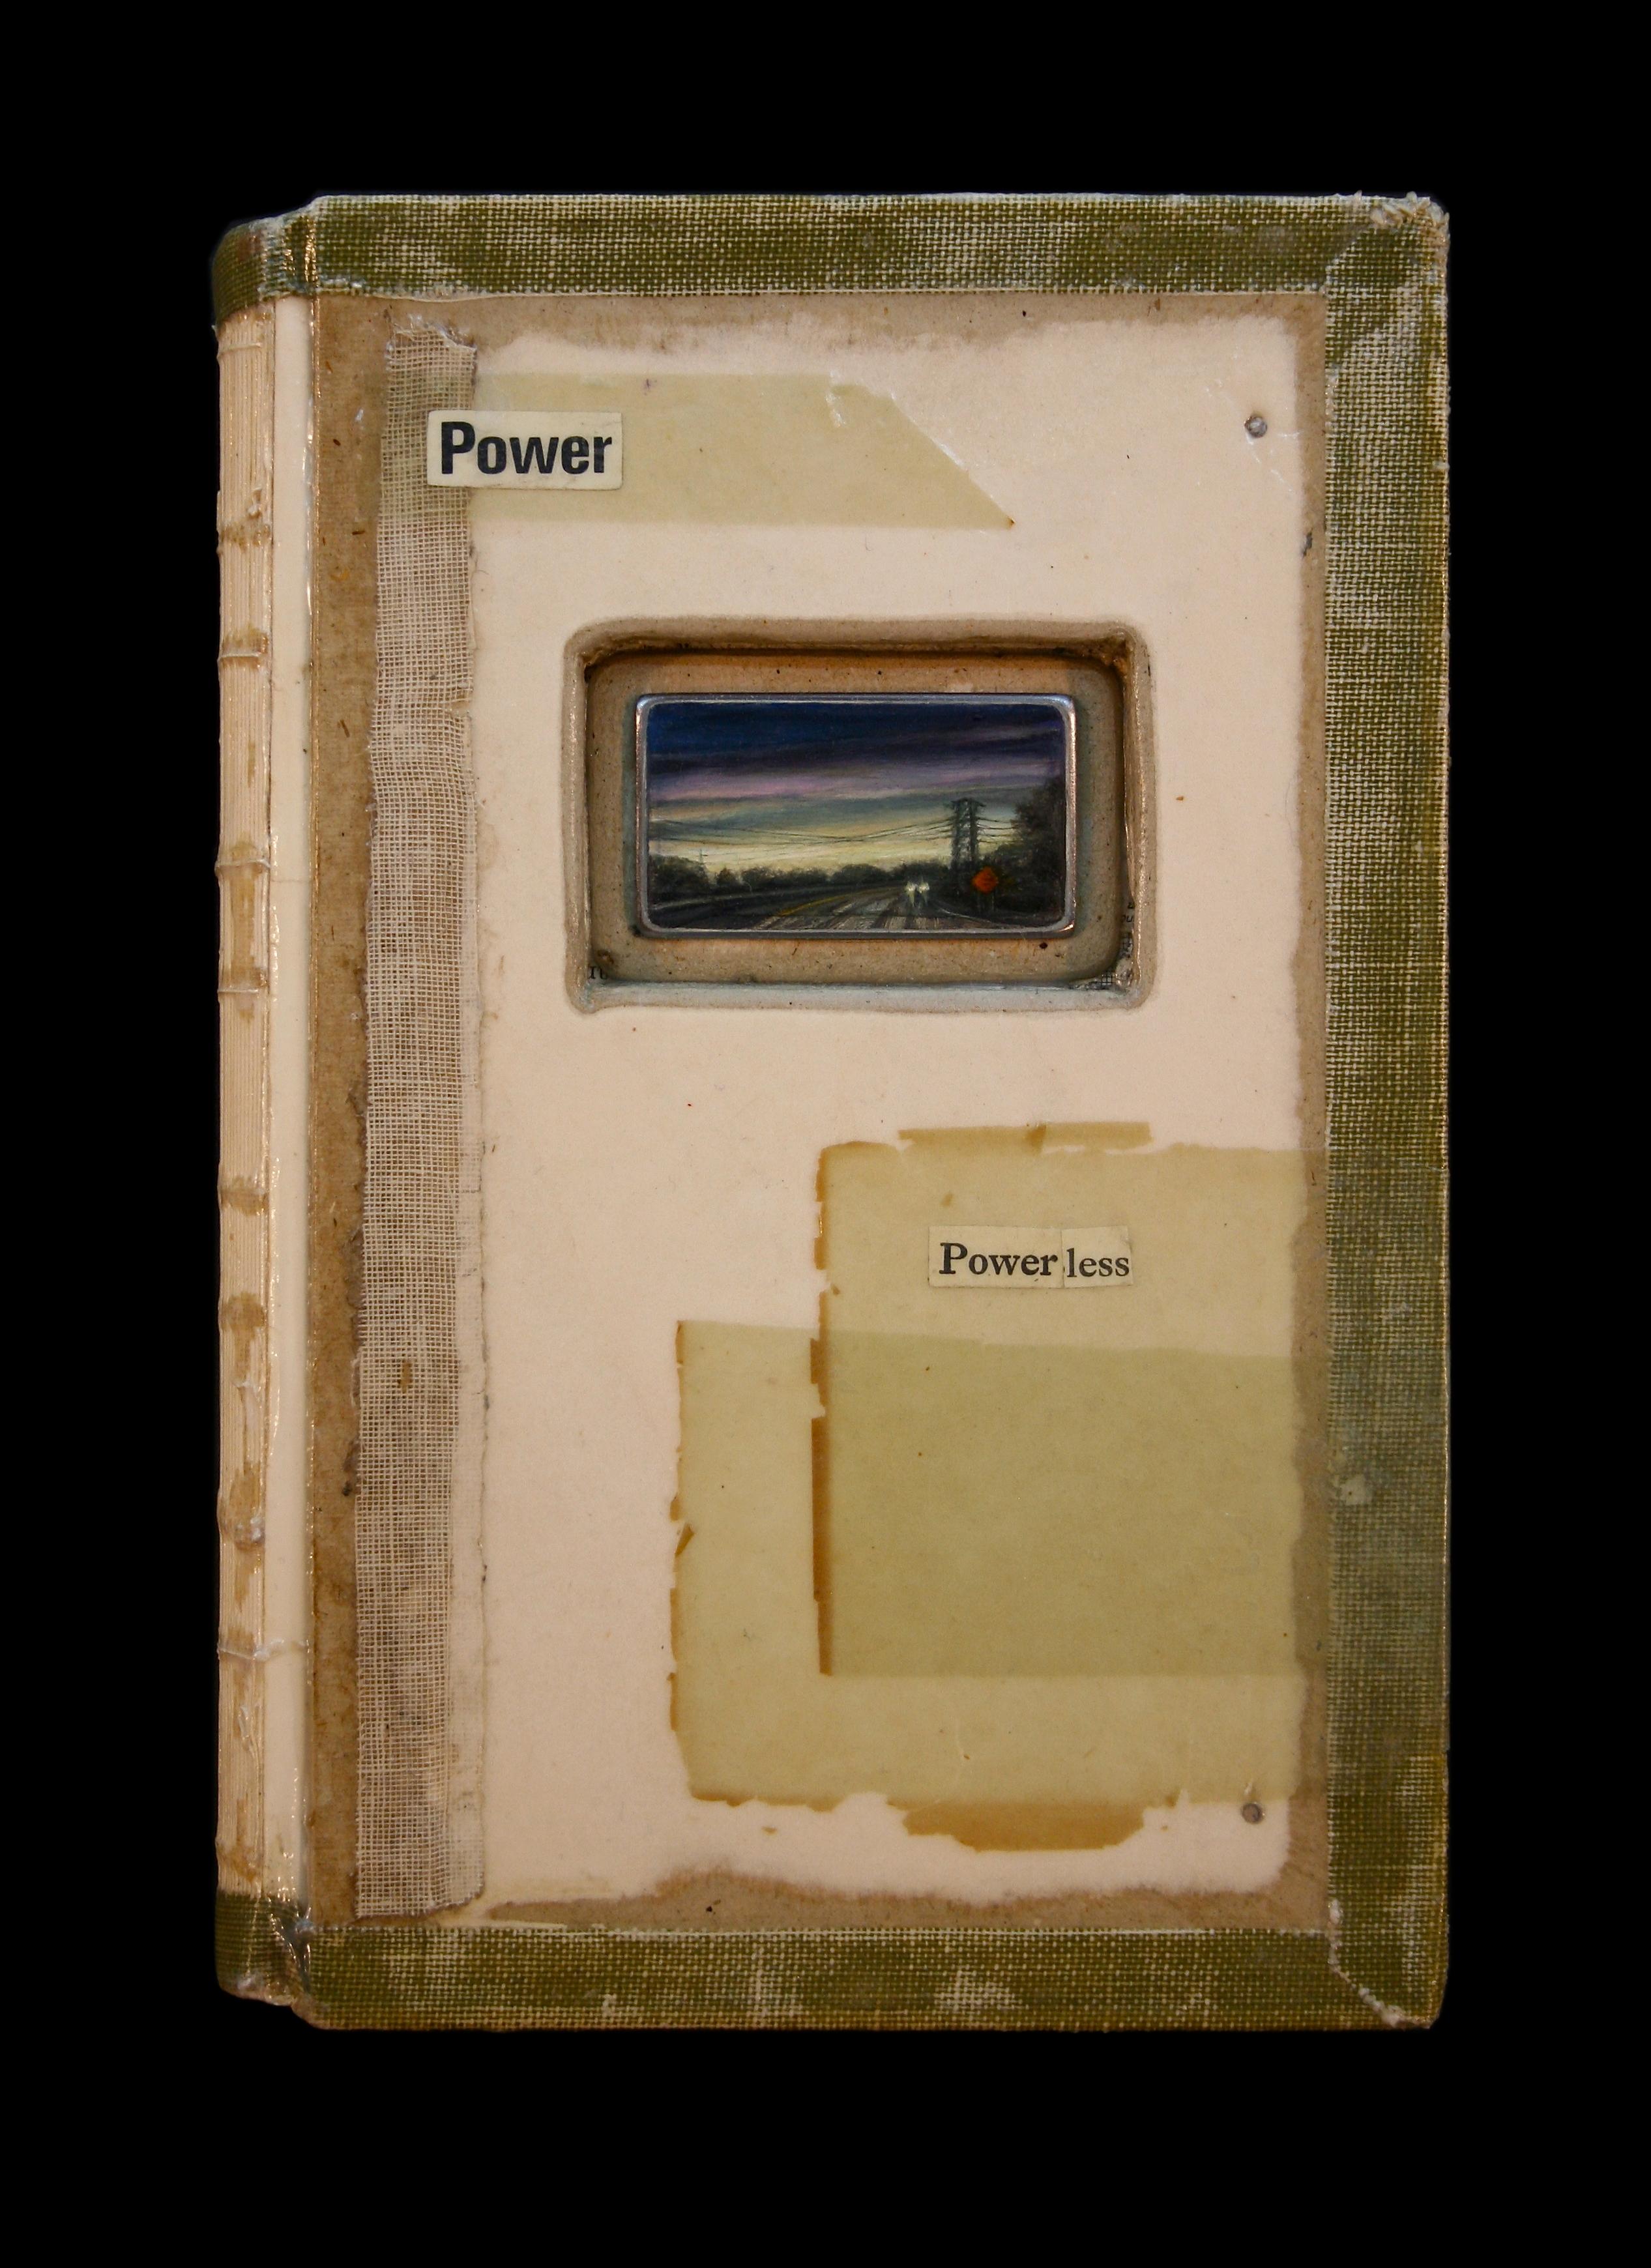 Power/Powerless - Mixed Media Art by Joseph DeCamillis